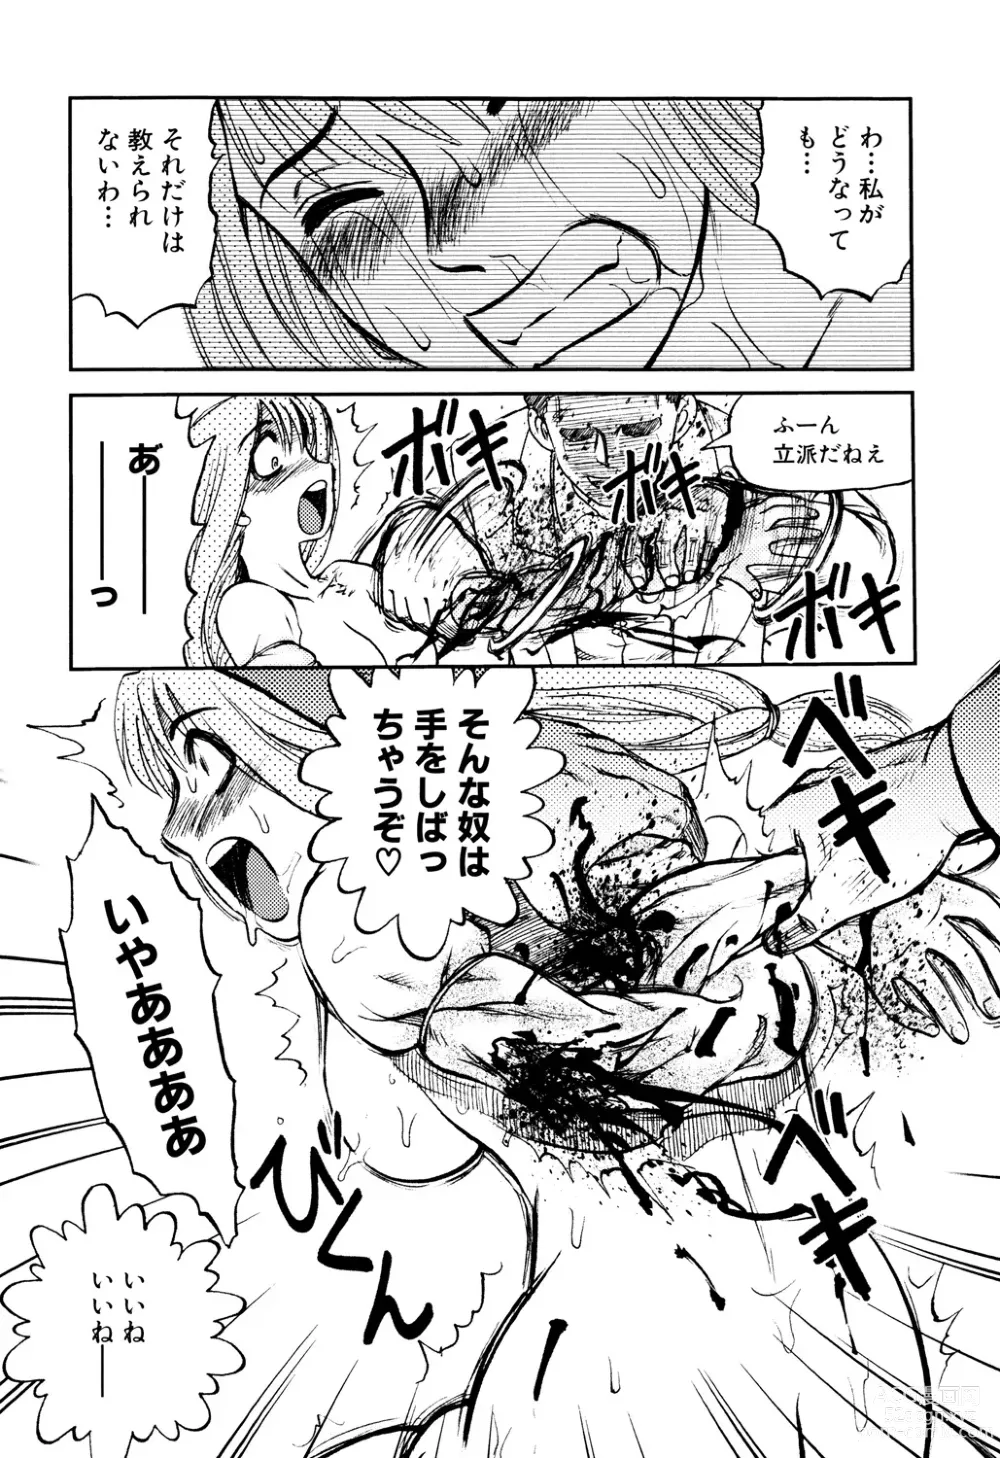 Page 131 of manga Ingyaku Kangoku Tou